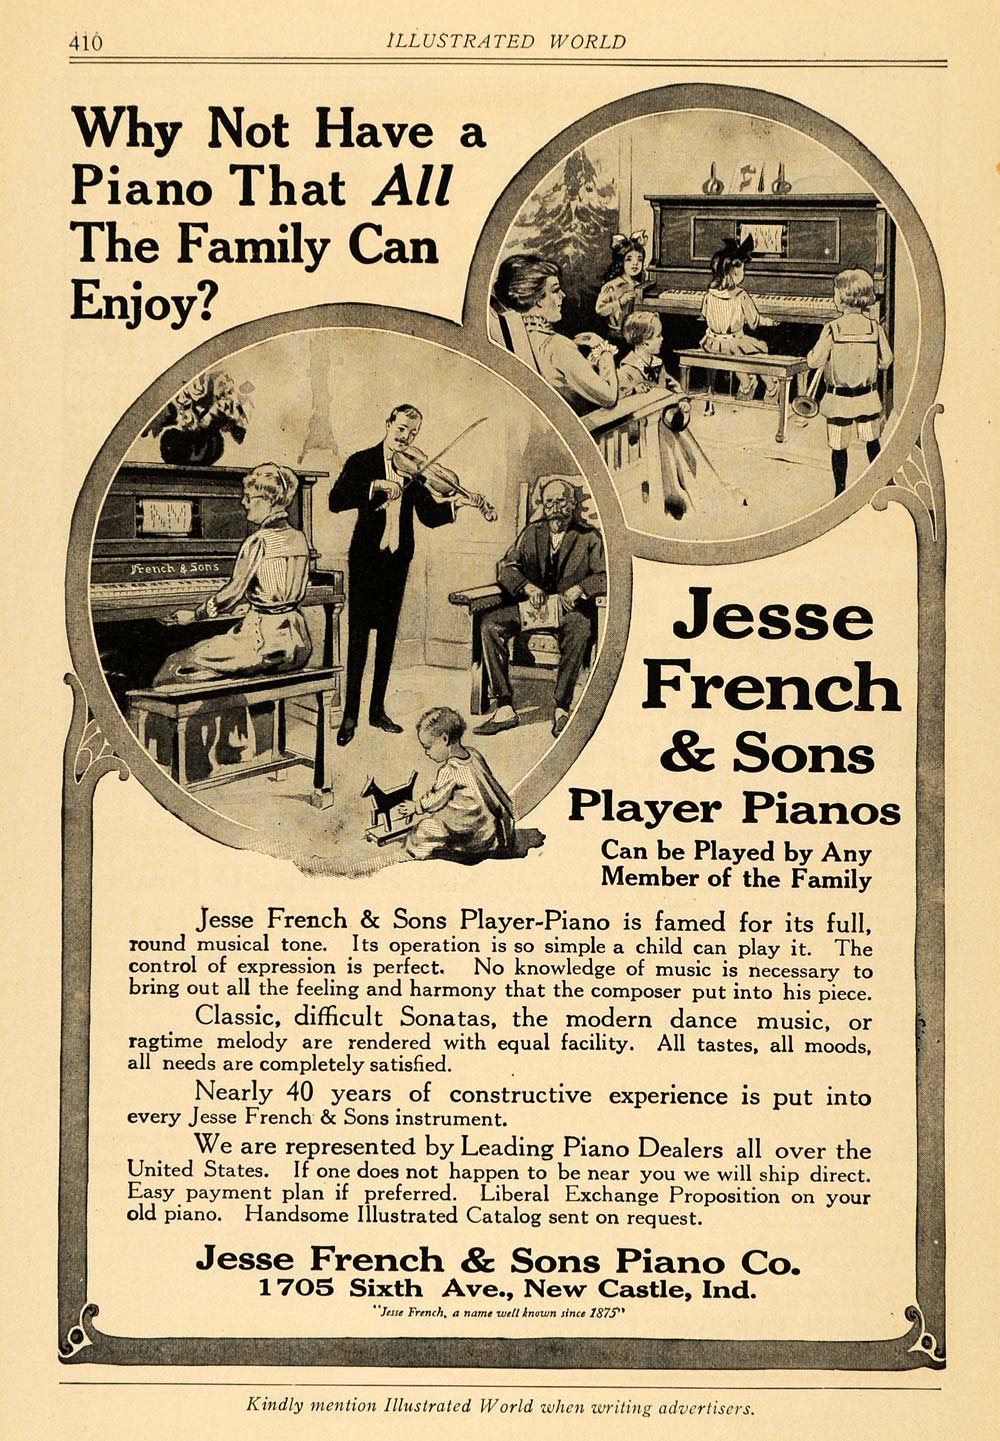 1916 Ad Jesse French Player Pianos For Family Enjoyment - ORIGINAL ILW1